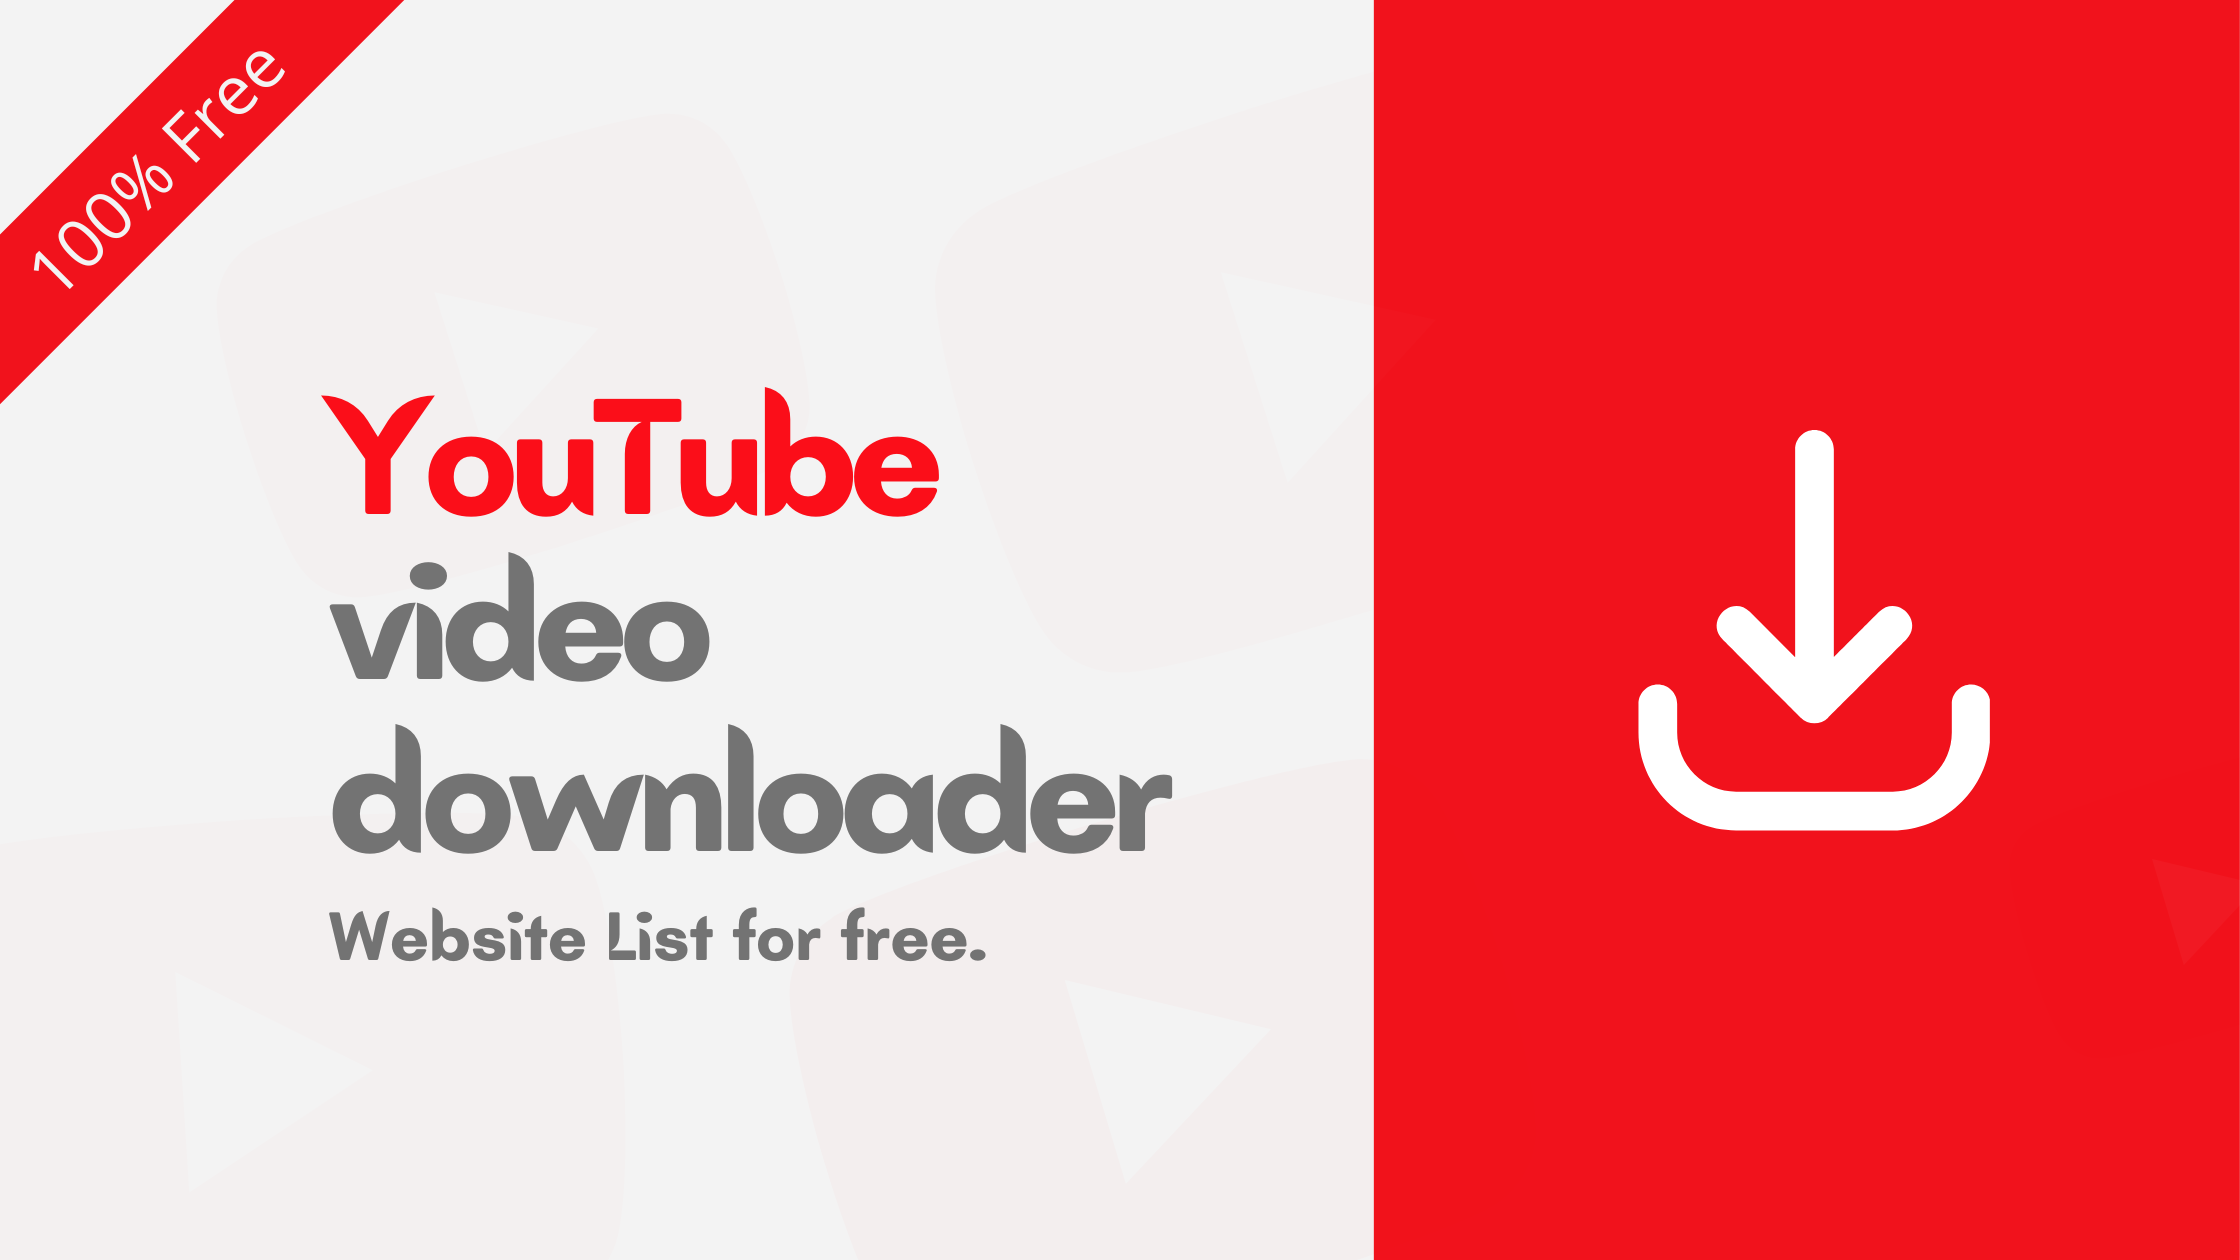 YouTube Video Downloader Website List